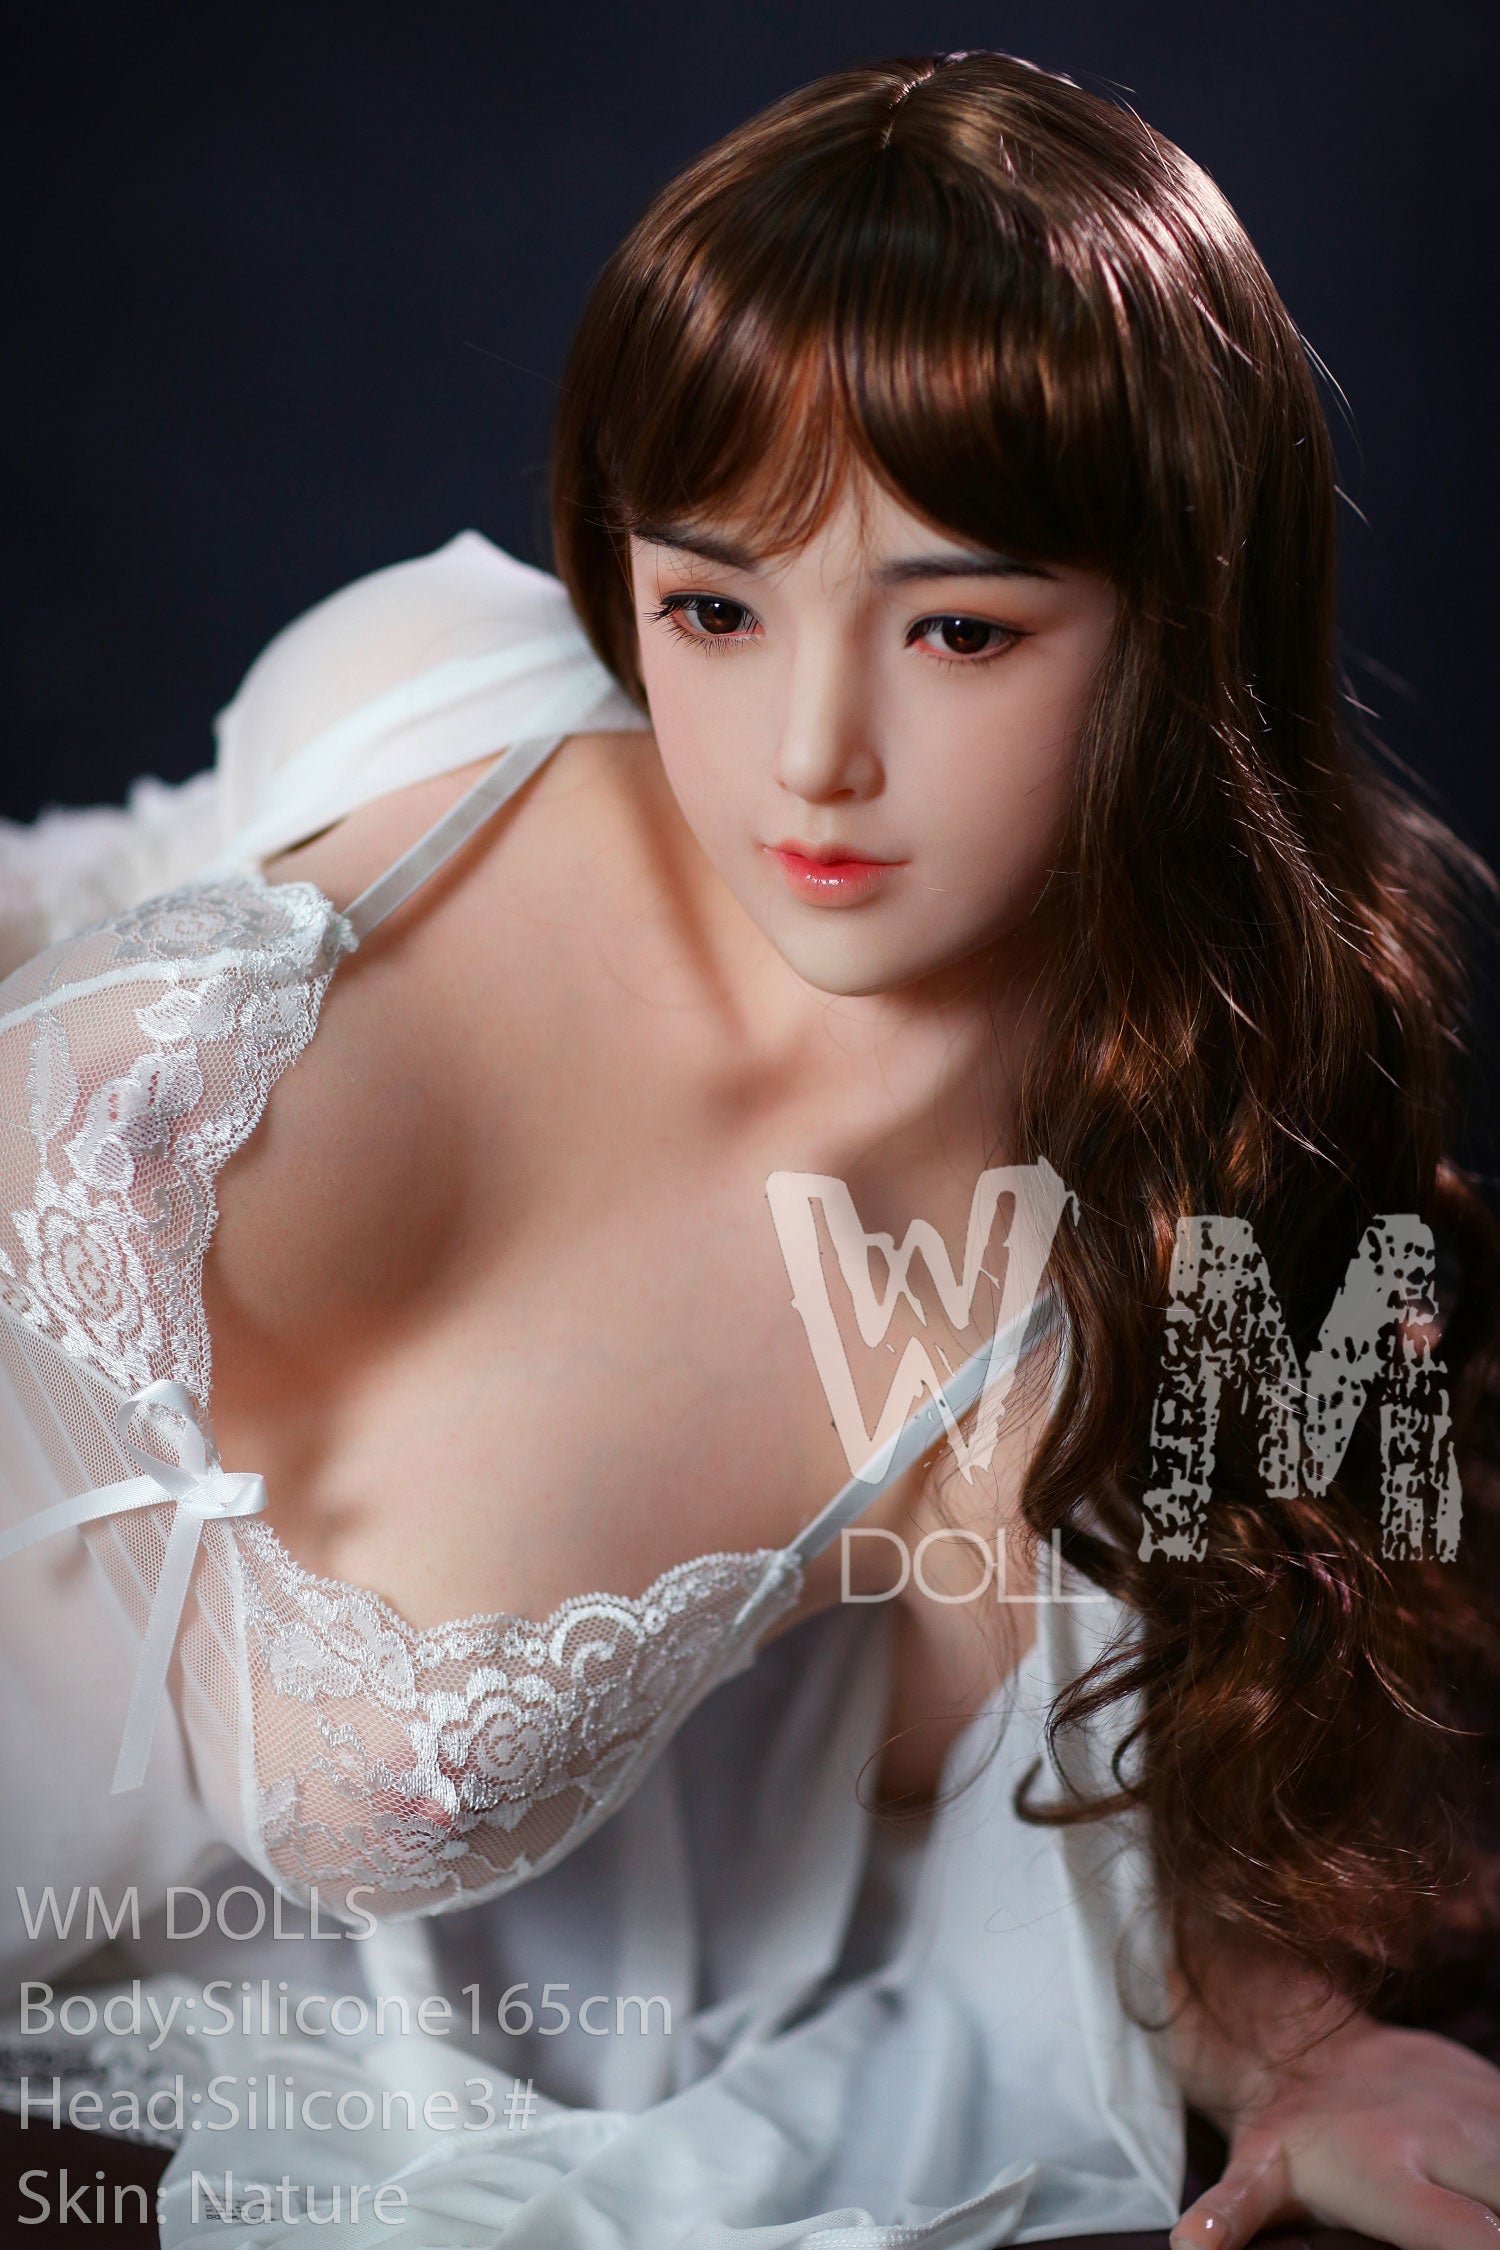 WM Doll 165 cm D Silicone - Natsu | Buy Sex Dolls at DOLLS ACTUALLY